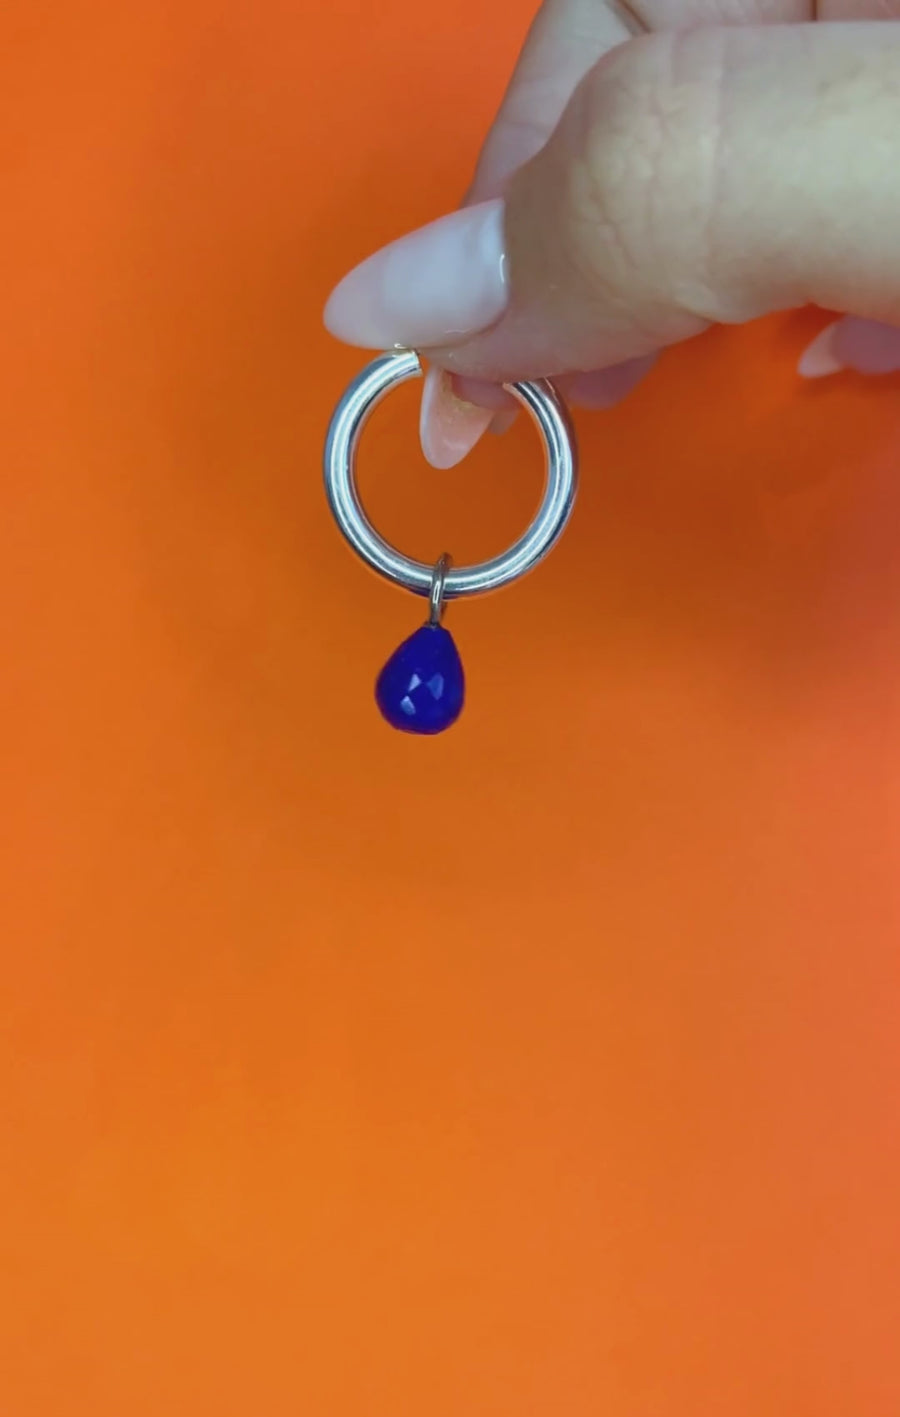 Lazuli Pear Hoop Charm